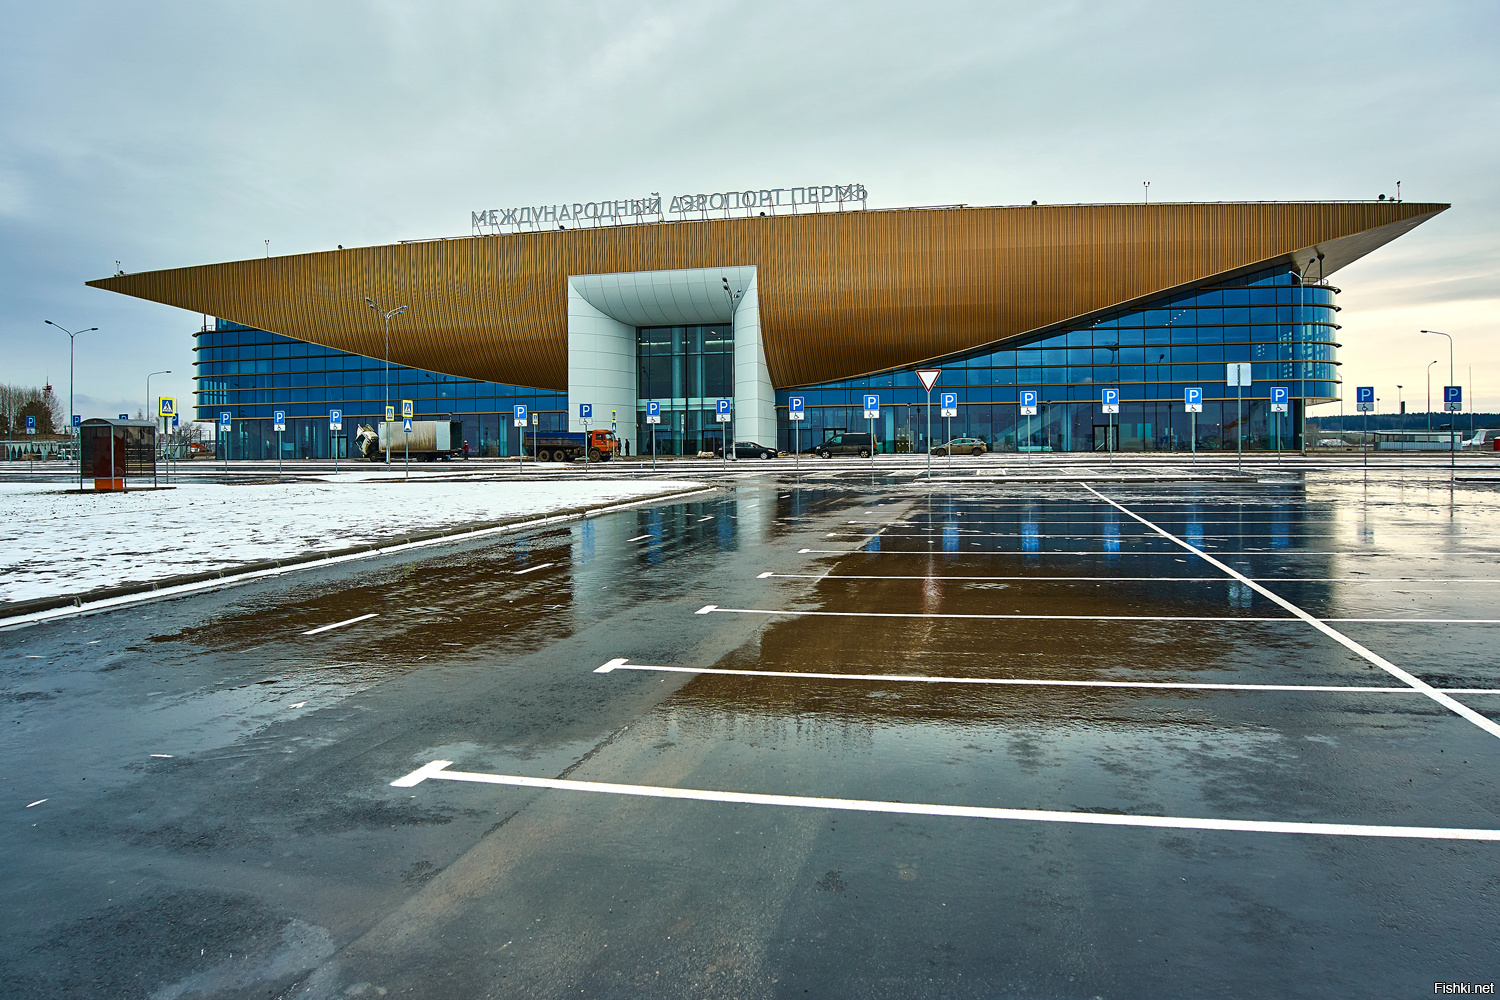 аэропорт пермь зимой